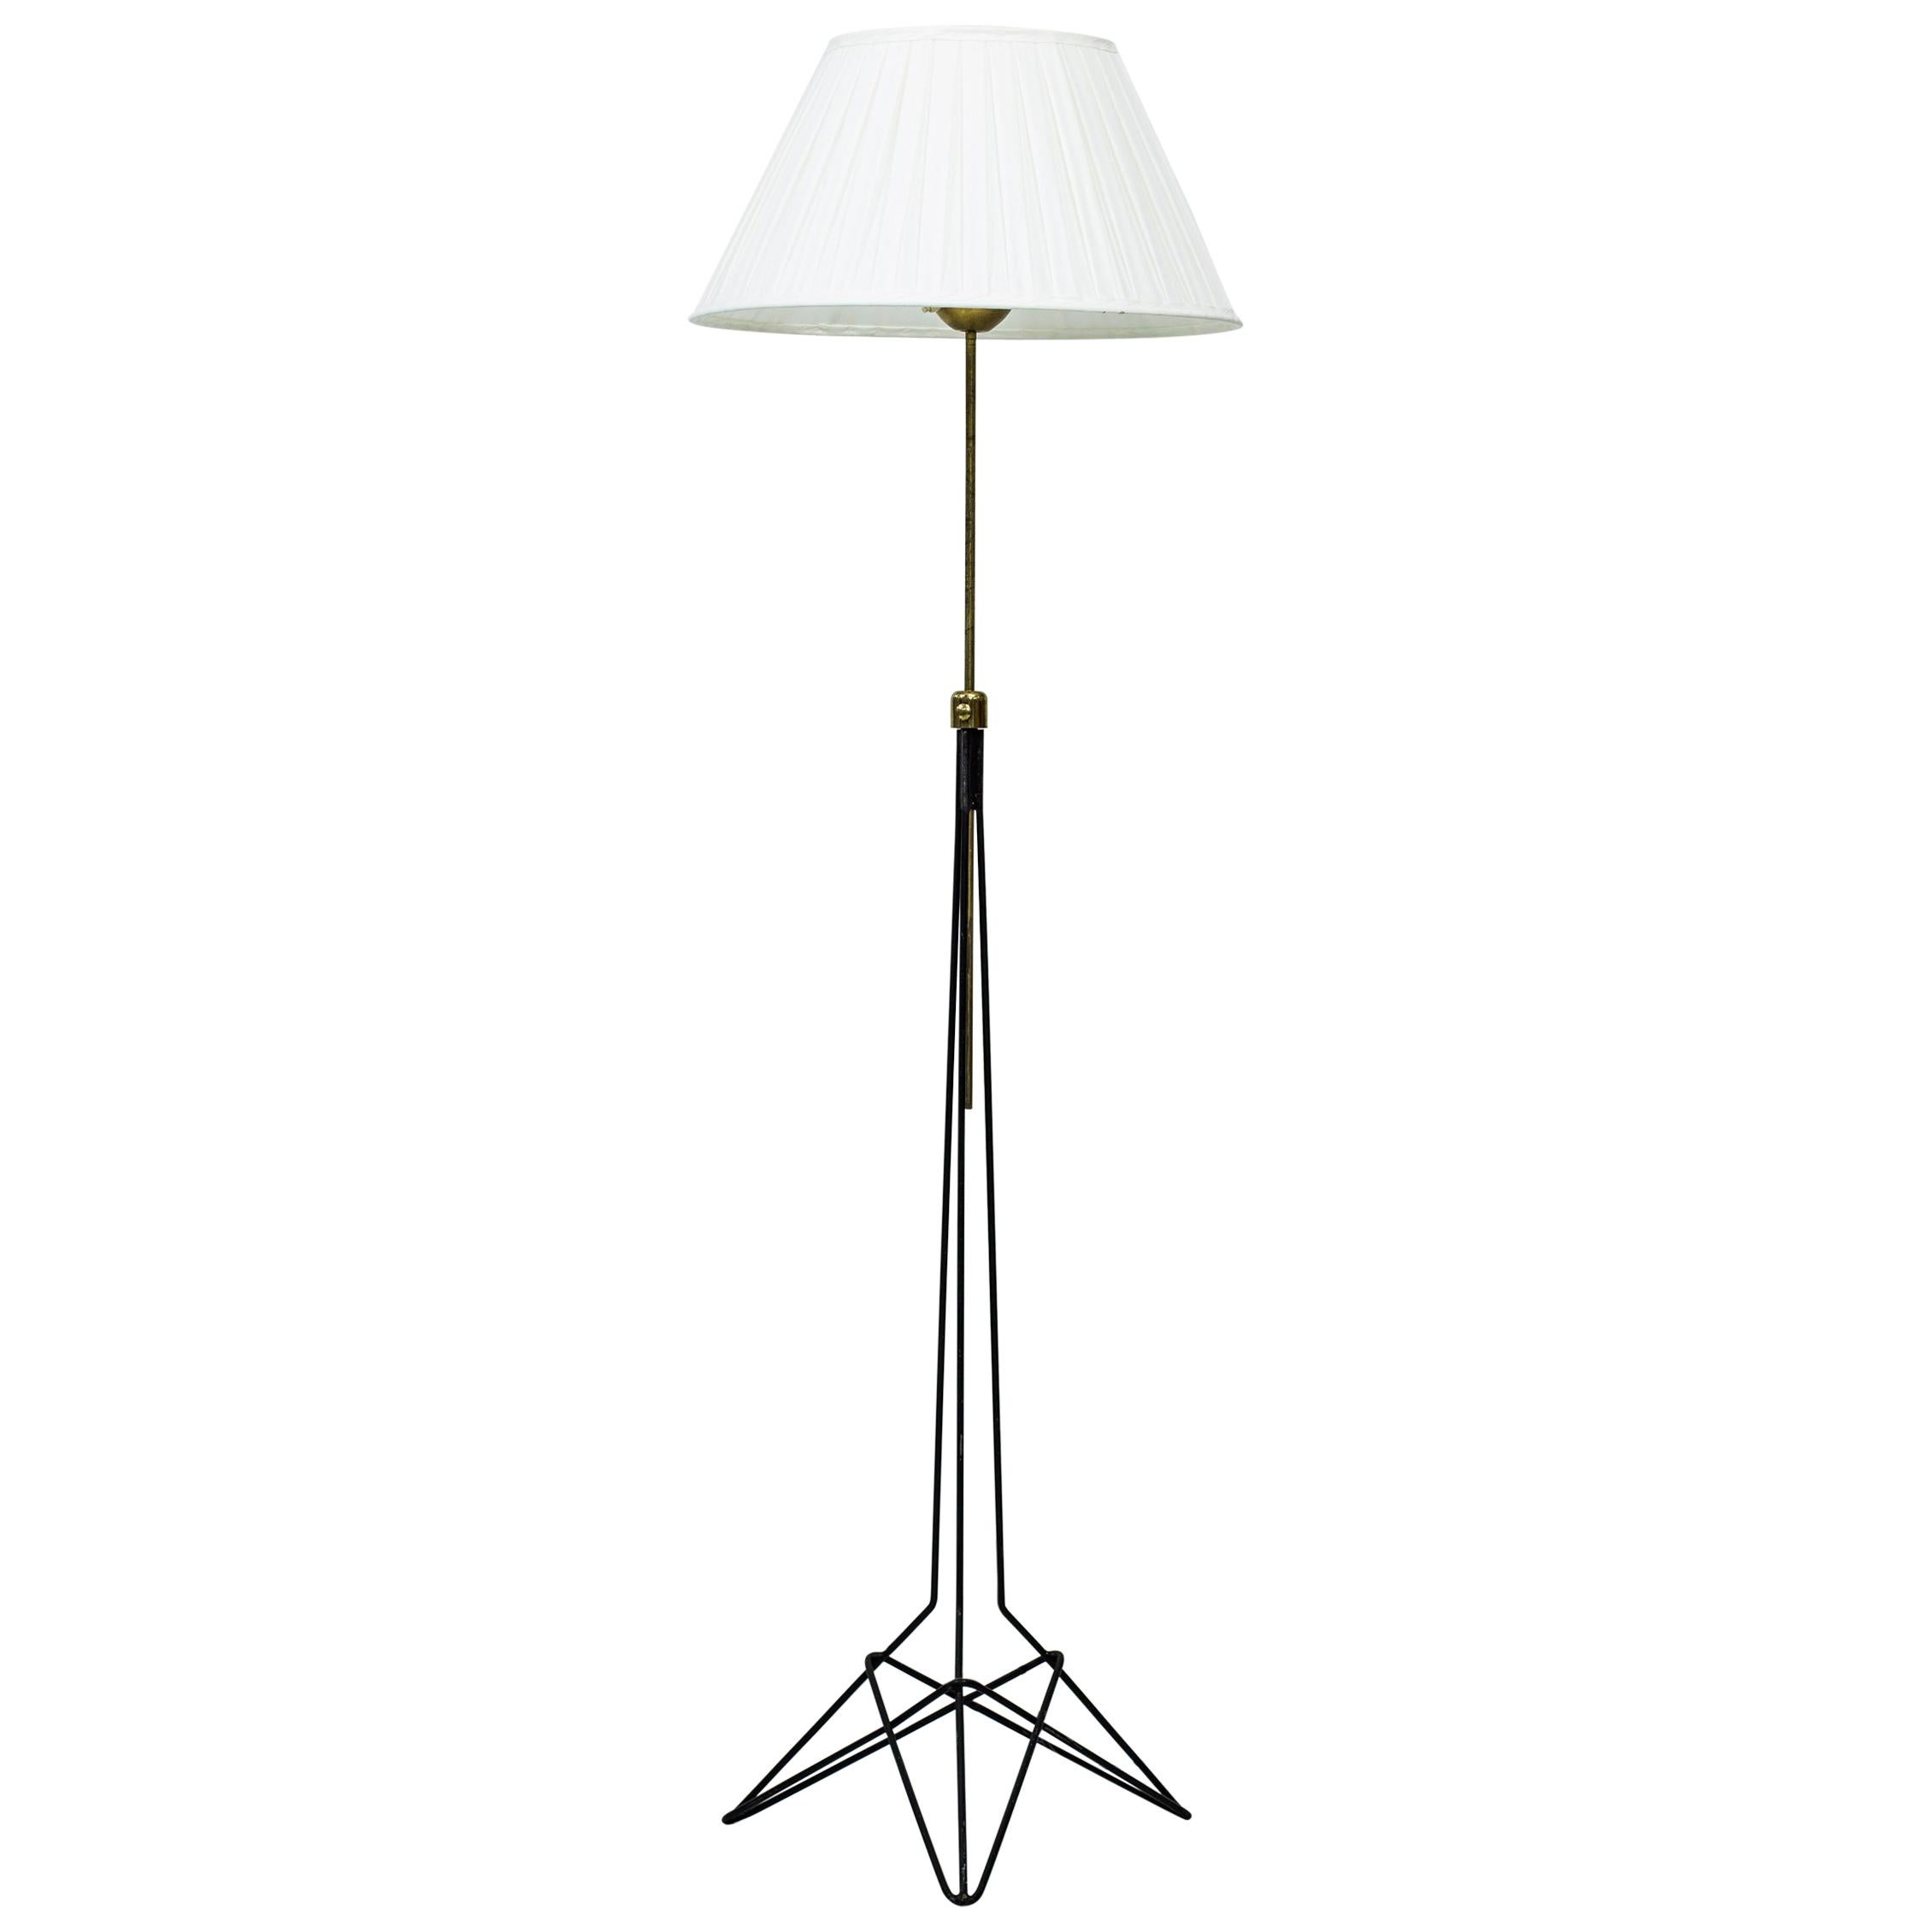 Floor Lamp by Nils Strinning for String Design, Sweden, 1950s